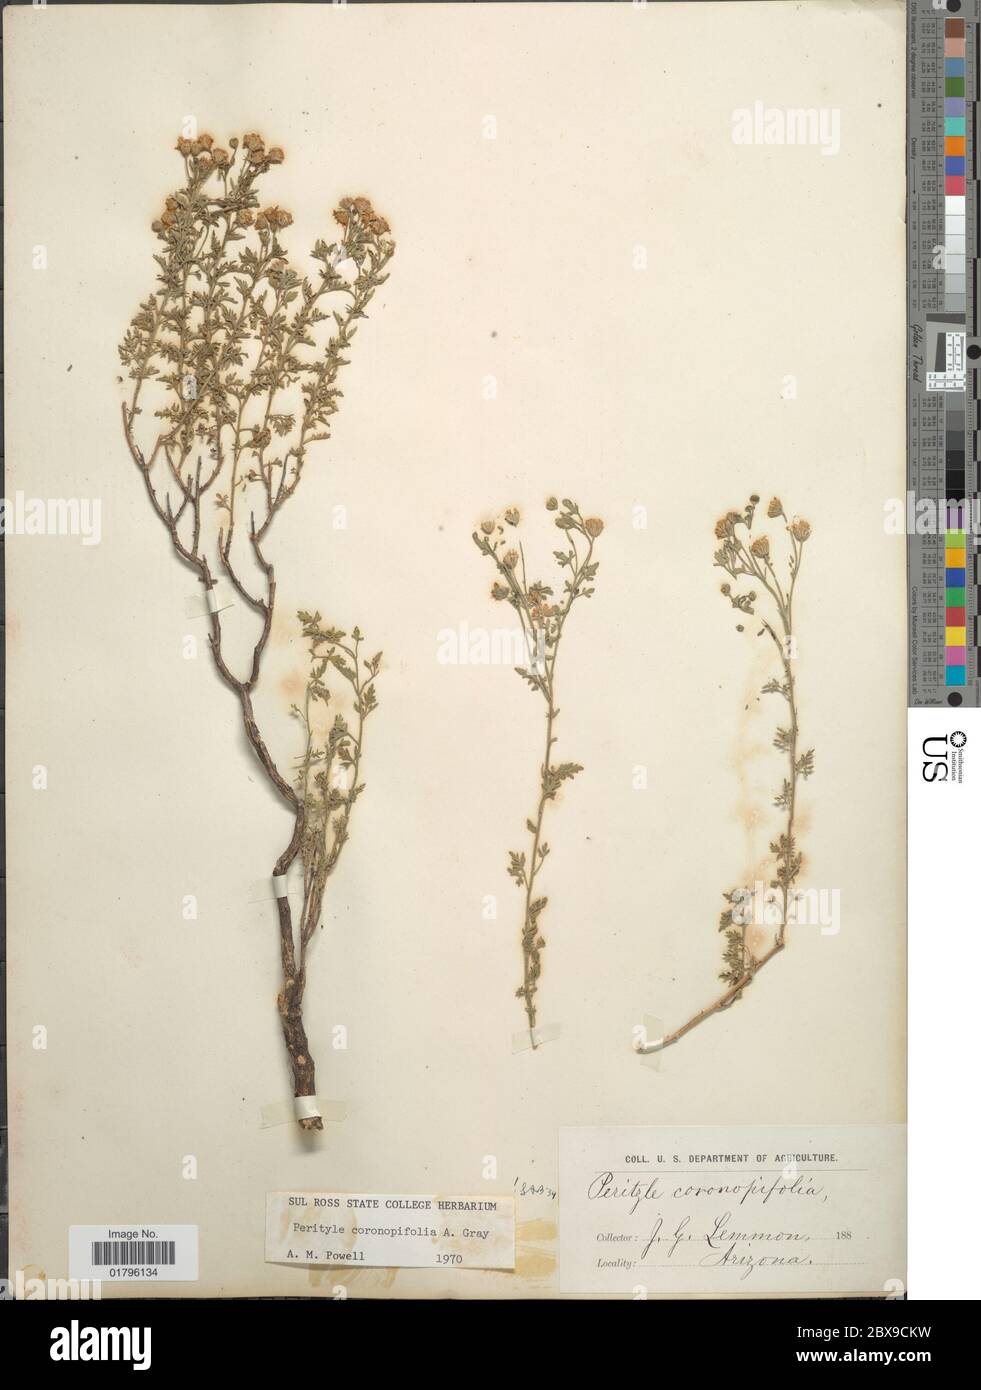 Perityle coronopifolia A Gray Perityle coronopifolia A Gray. Stock Photo